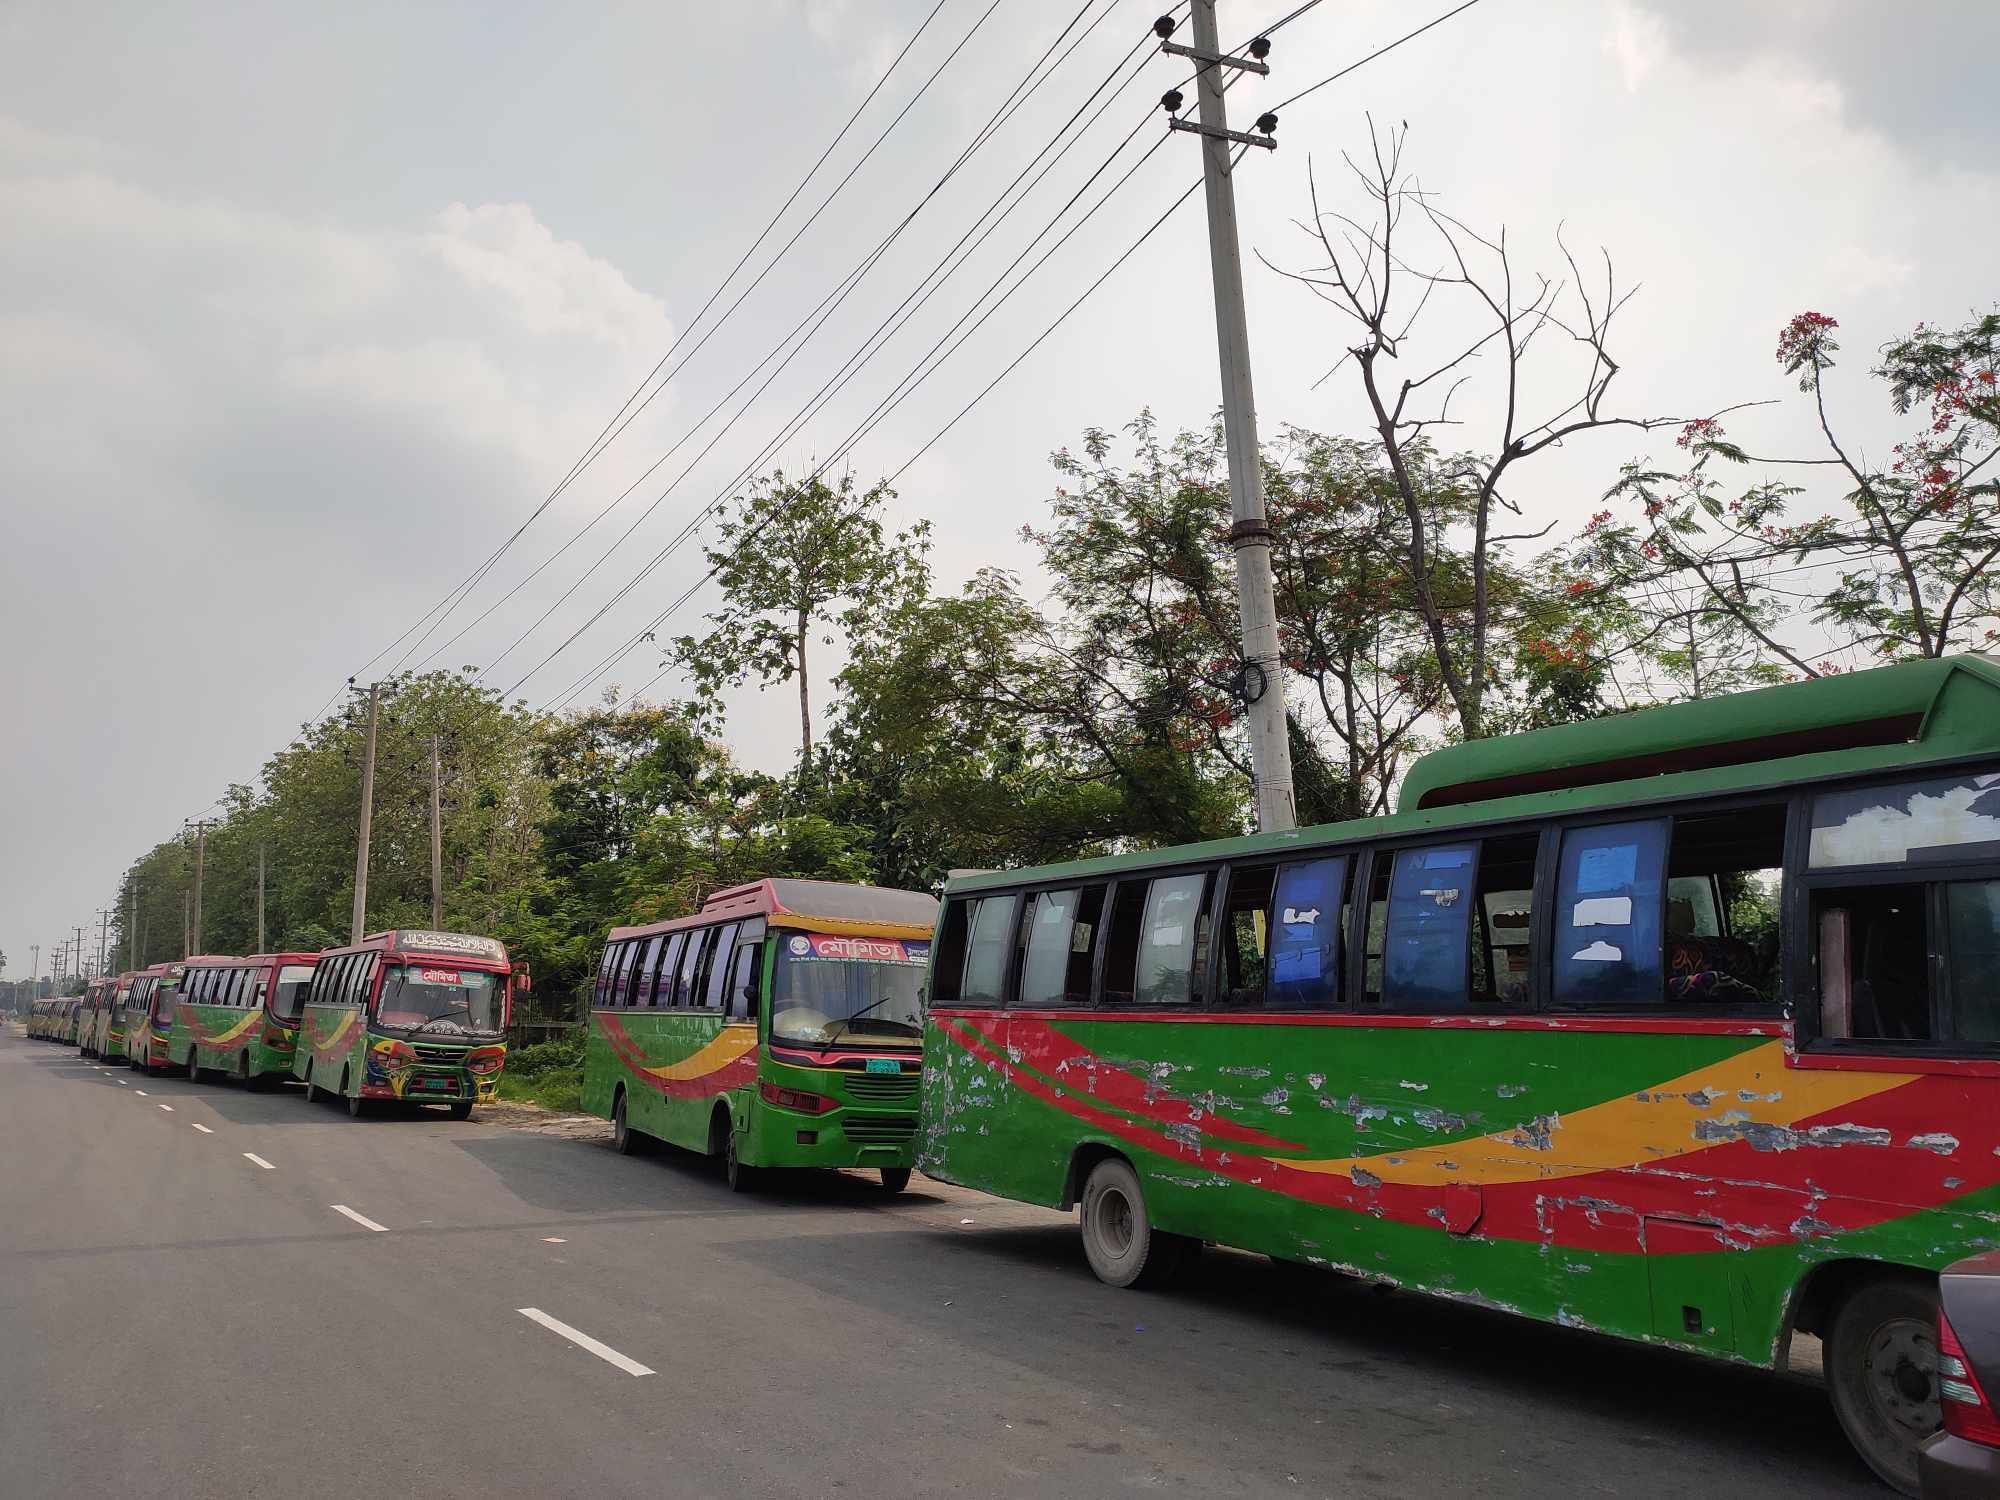 JU students seize 16 buses of Moumita Paribahan following student's complaint of molestation by helper